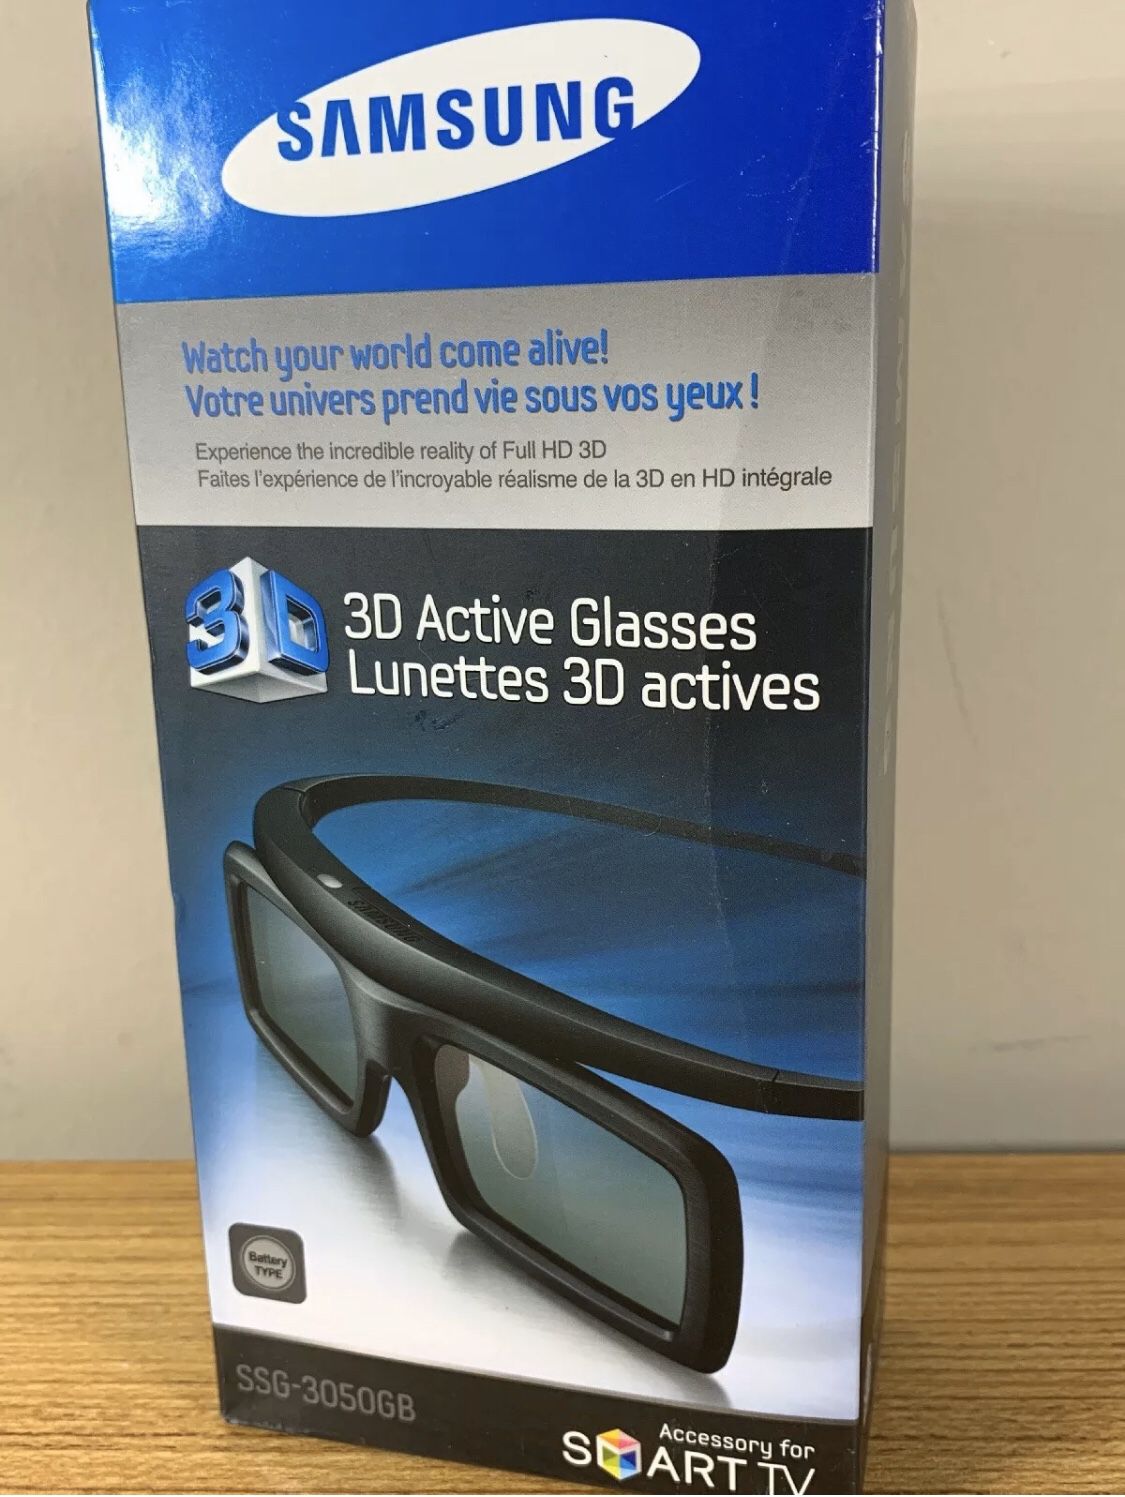 Samsung 3D Active Glasses SSG-3050GB For Smart TV NIB.